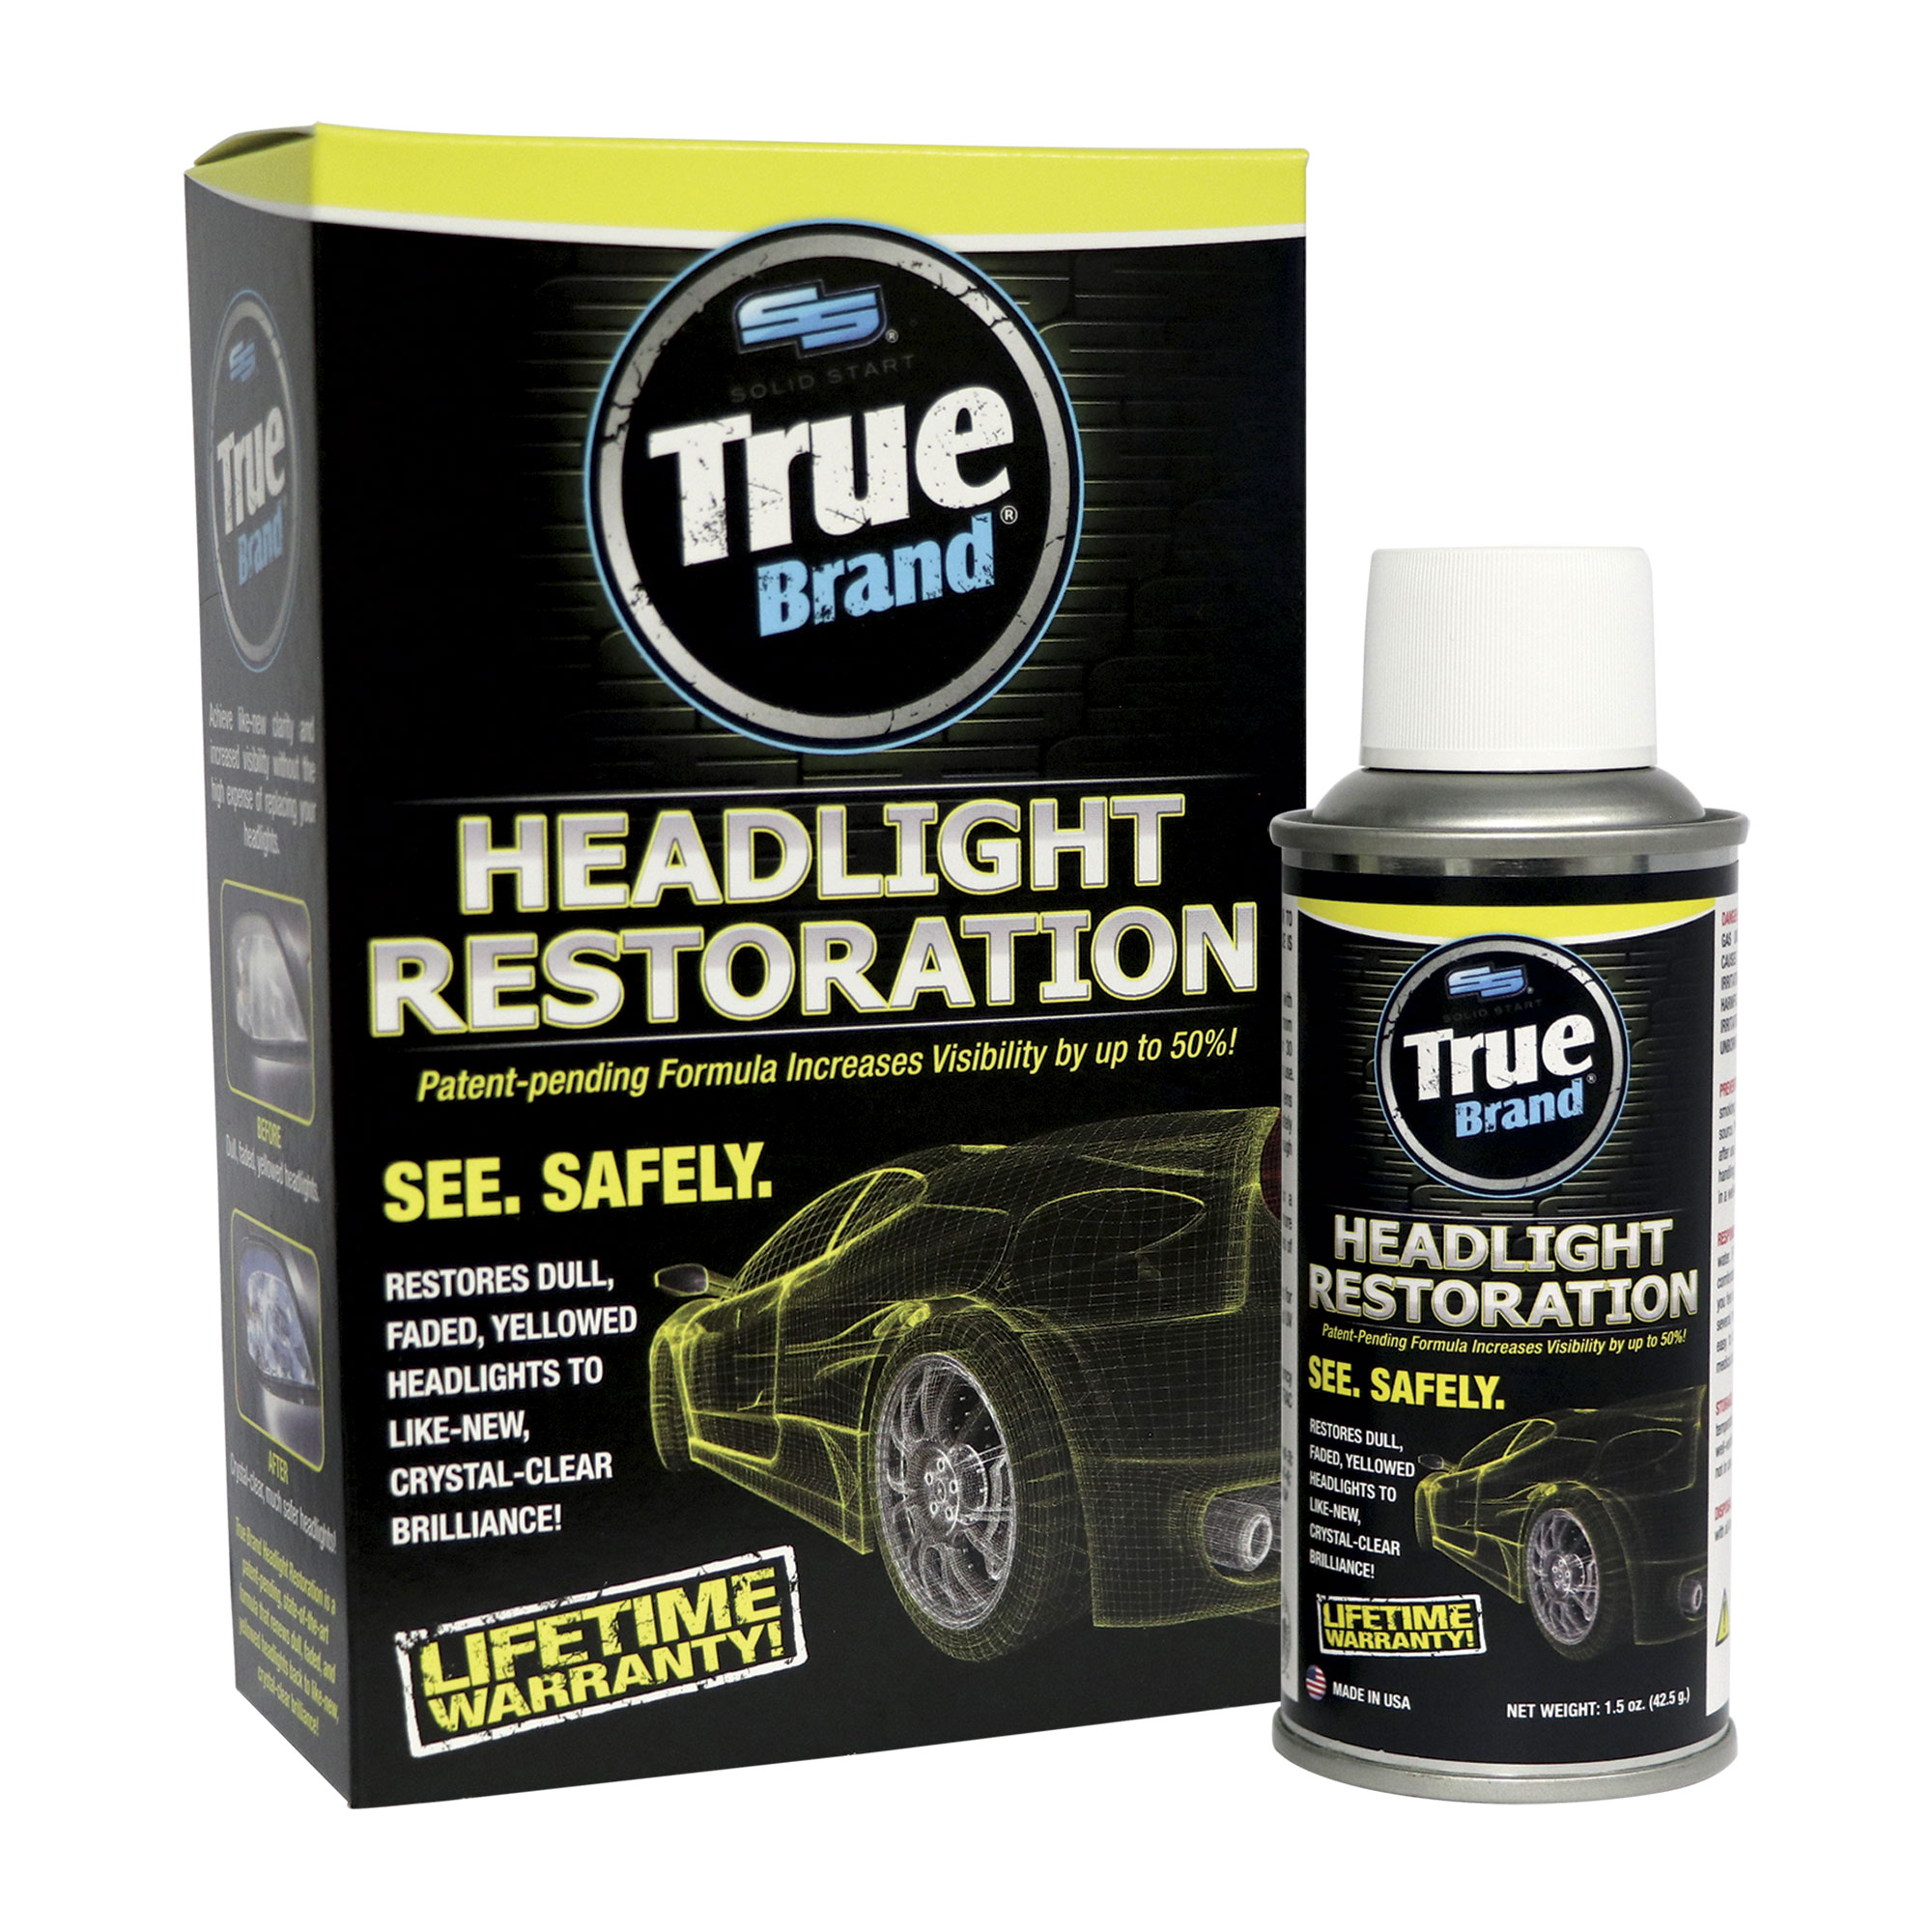 True Brand Headlight Restoration Kit